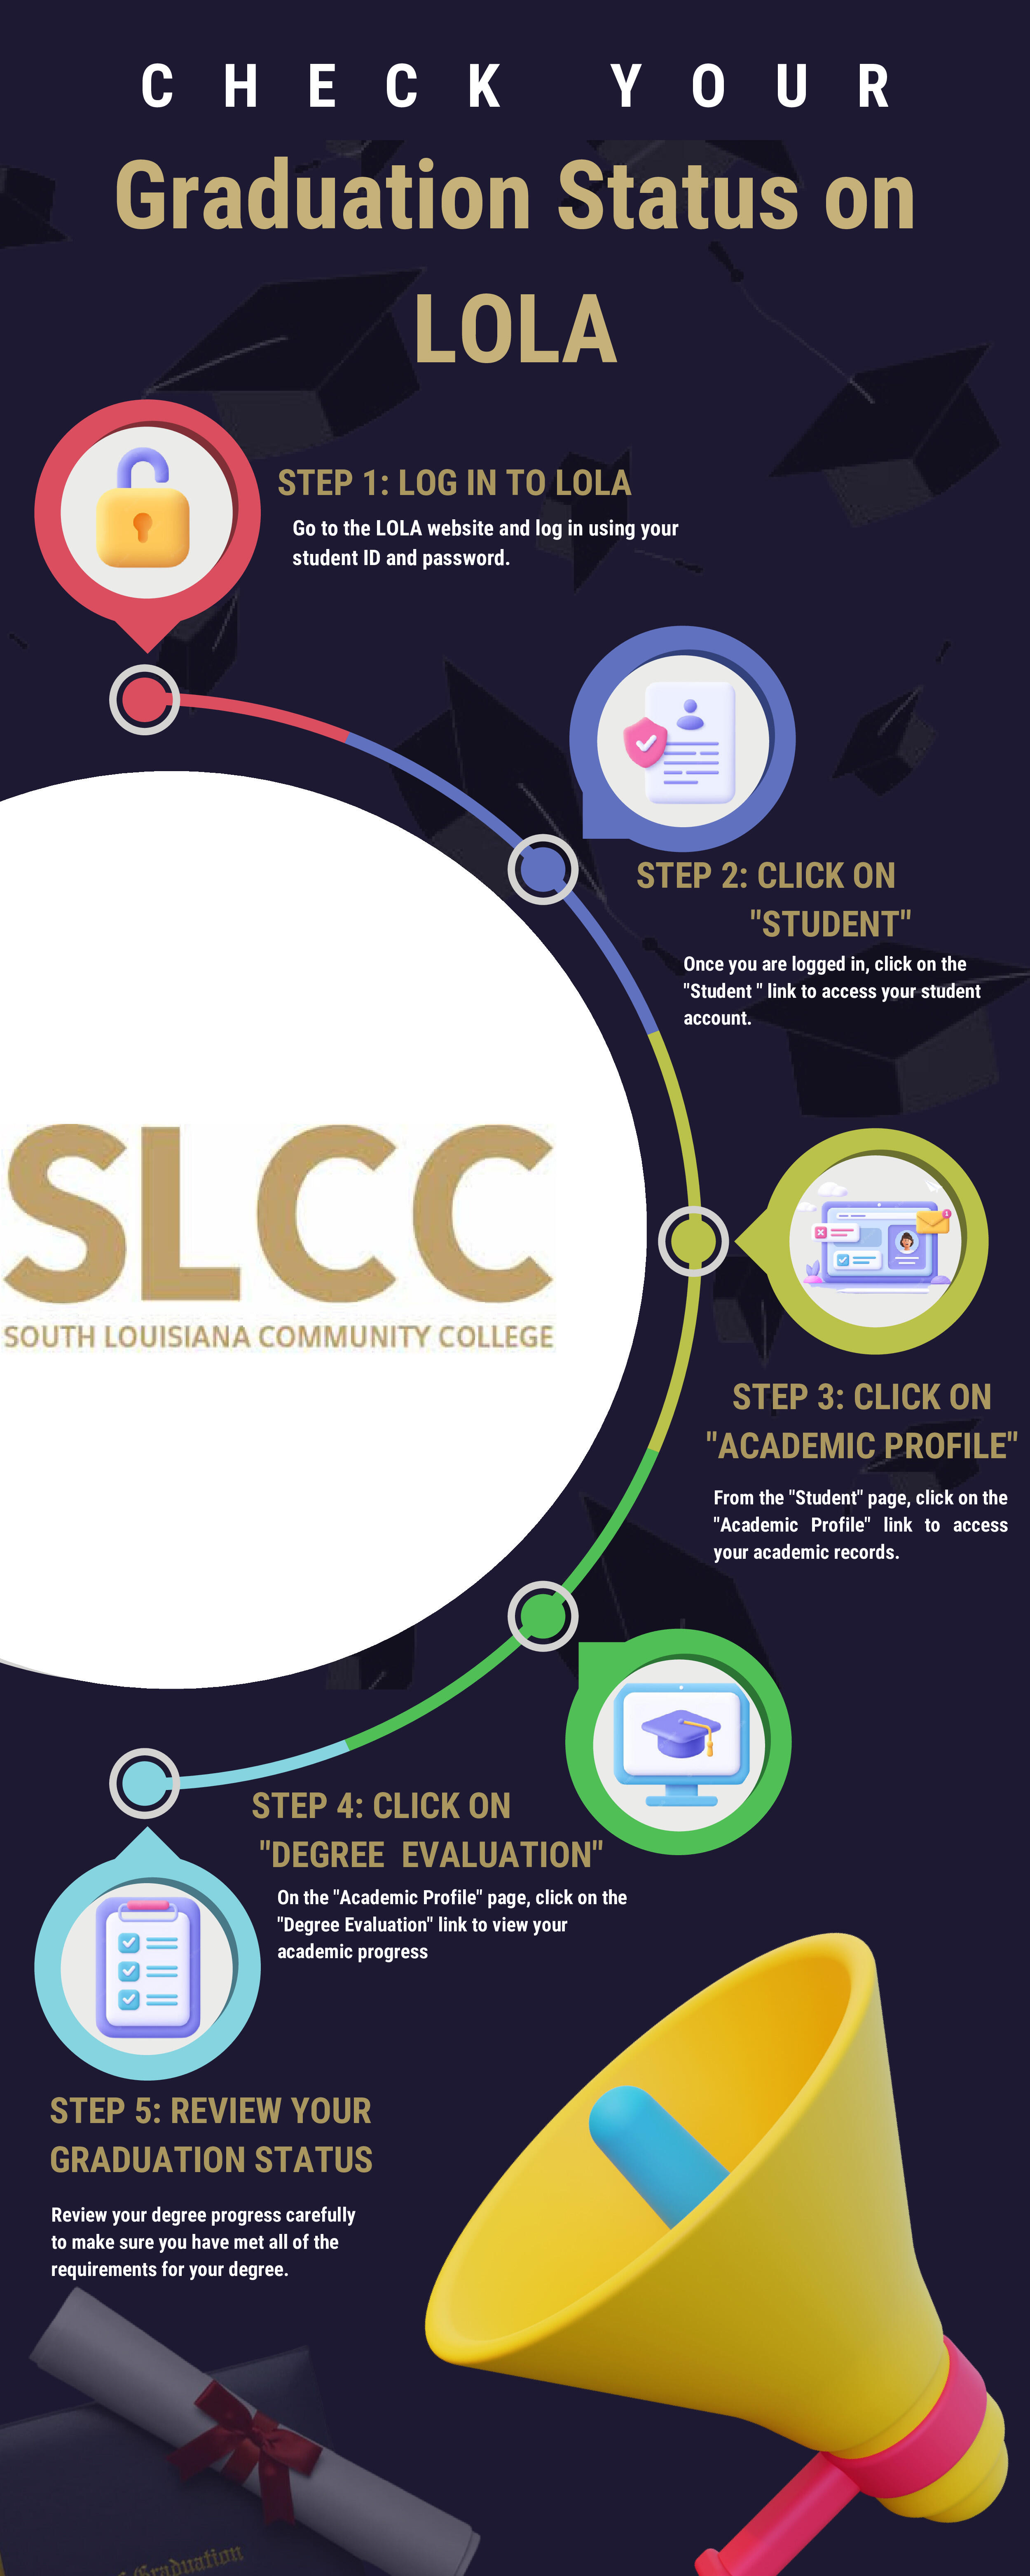 Check your graduation status at SLCC on Lola